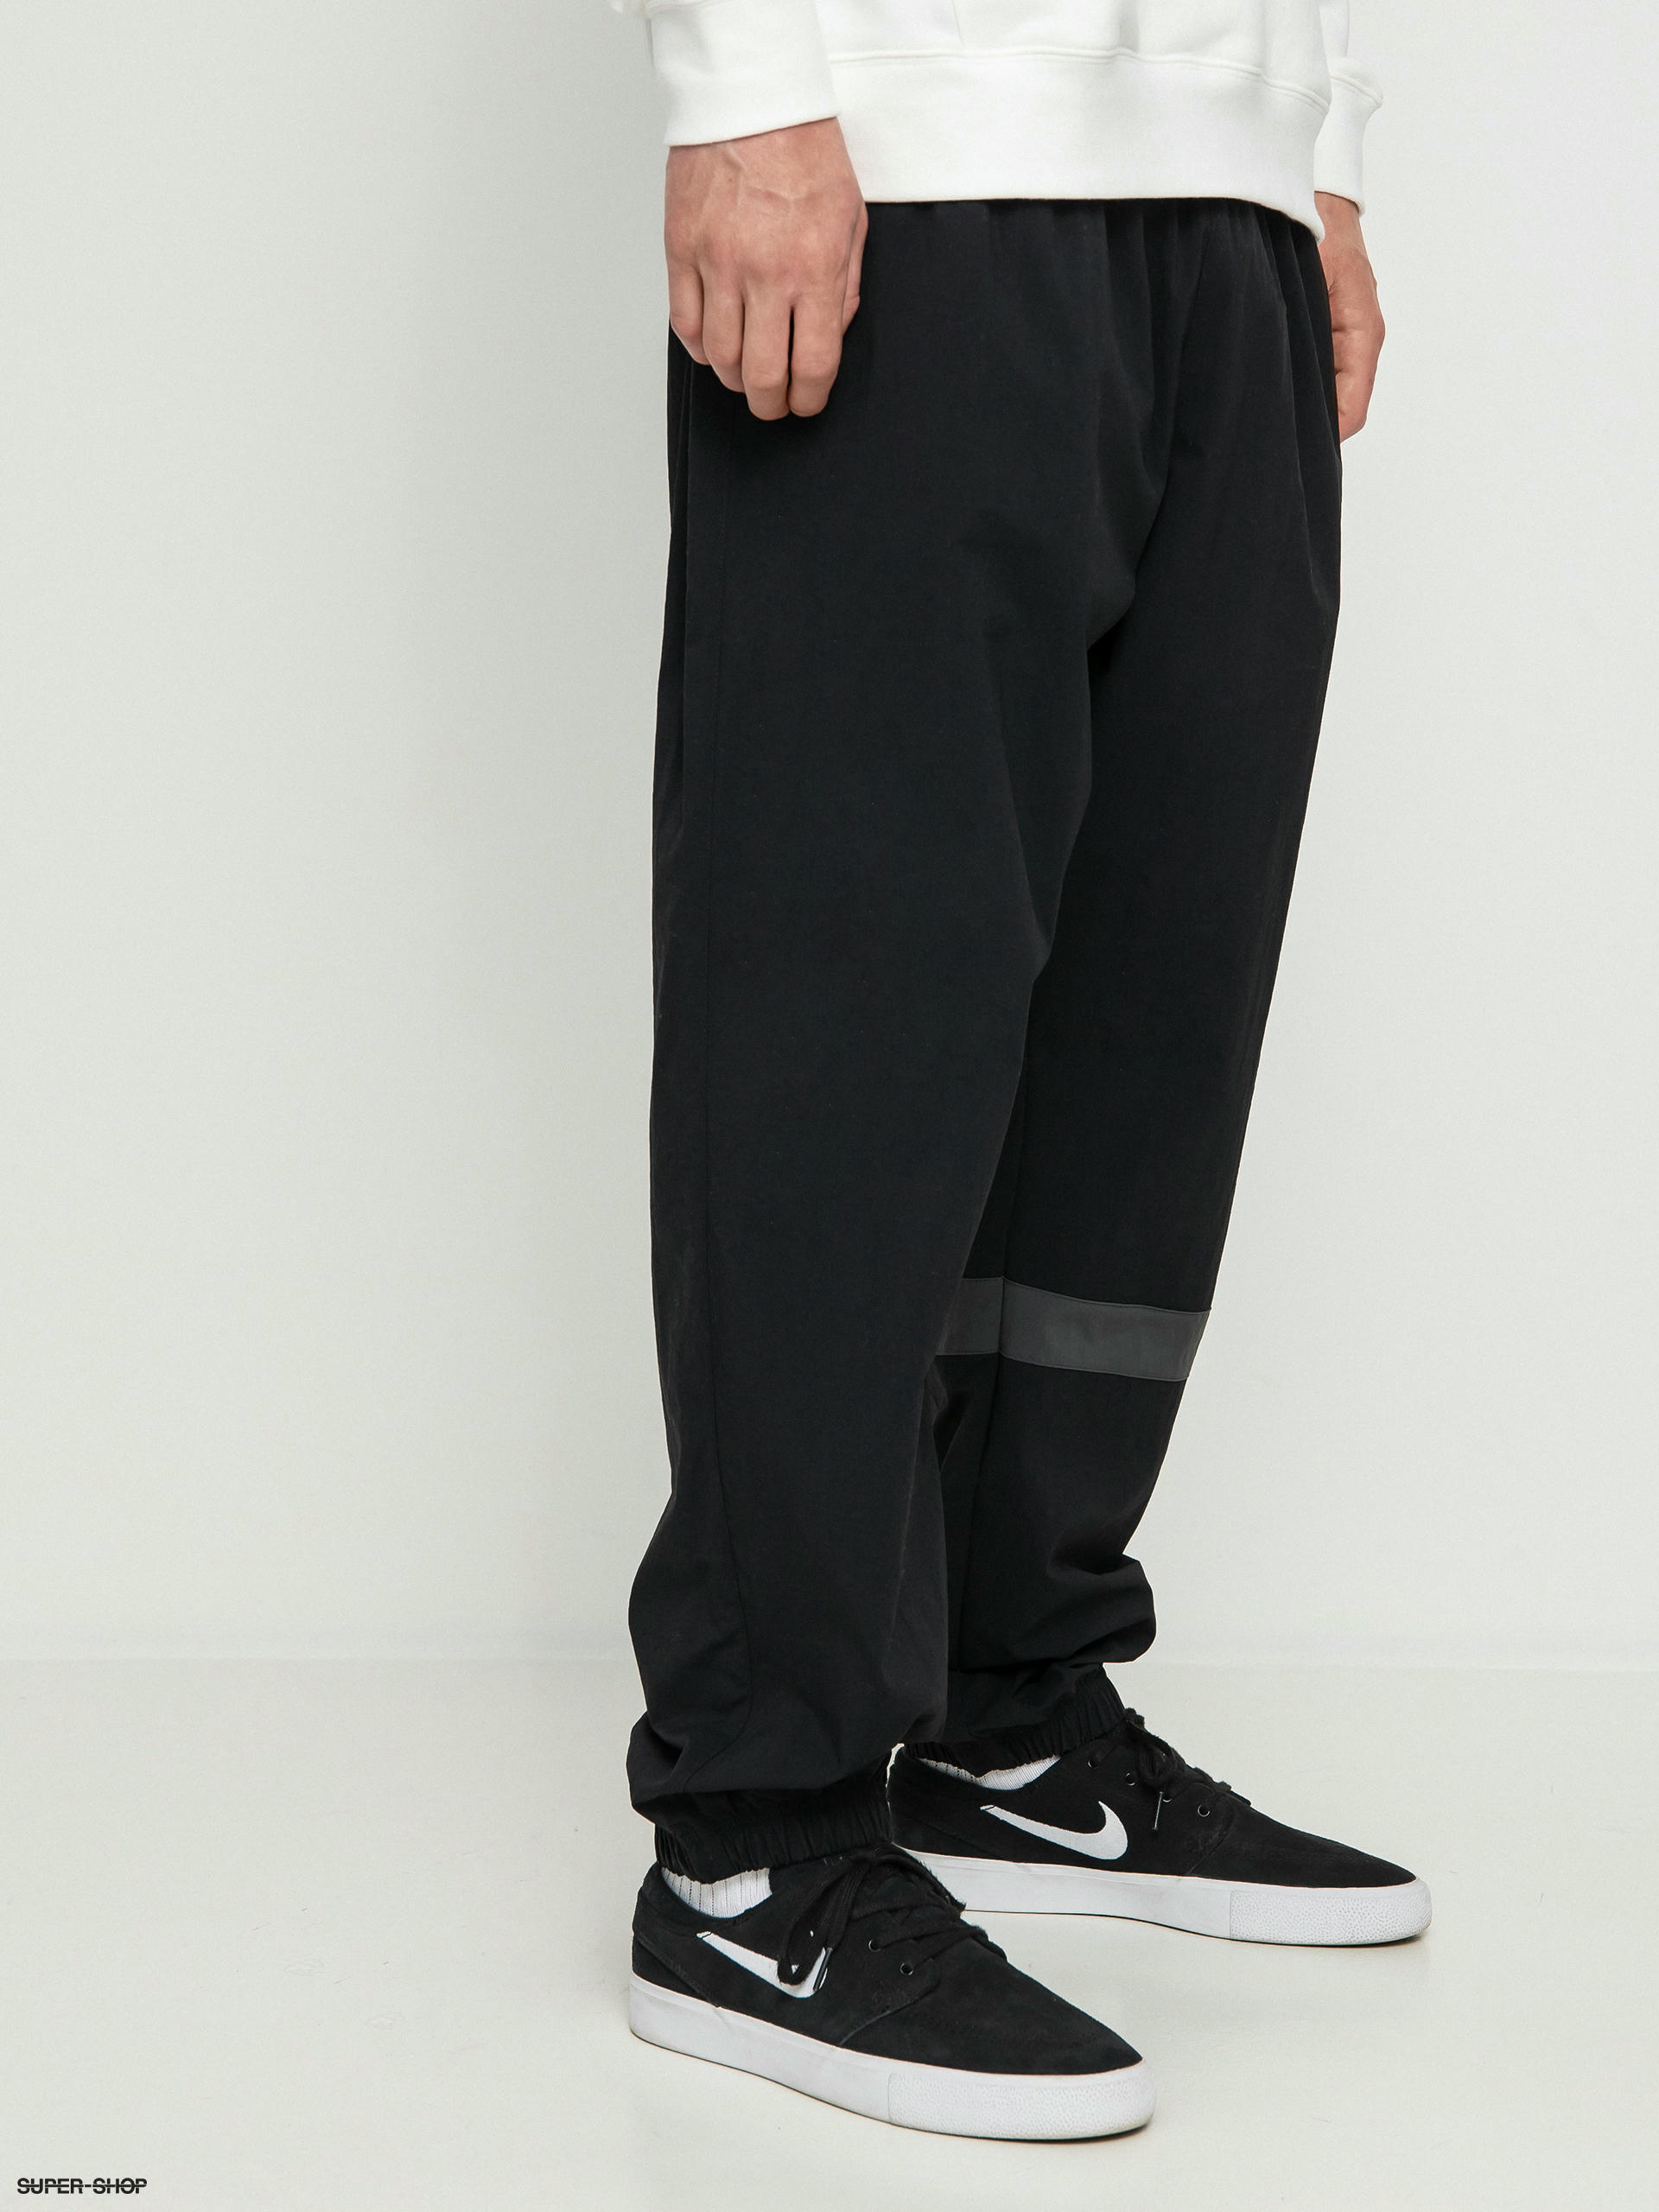 Nike track pants black large vintage Y2k stained... - Depop